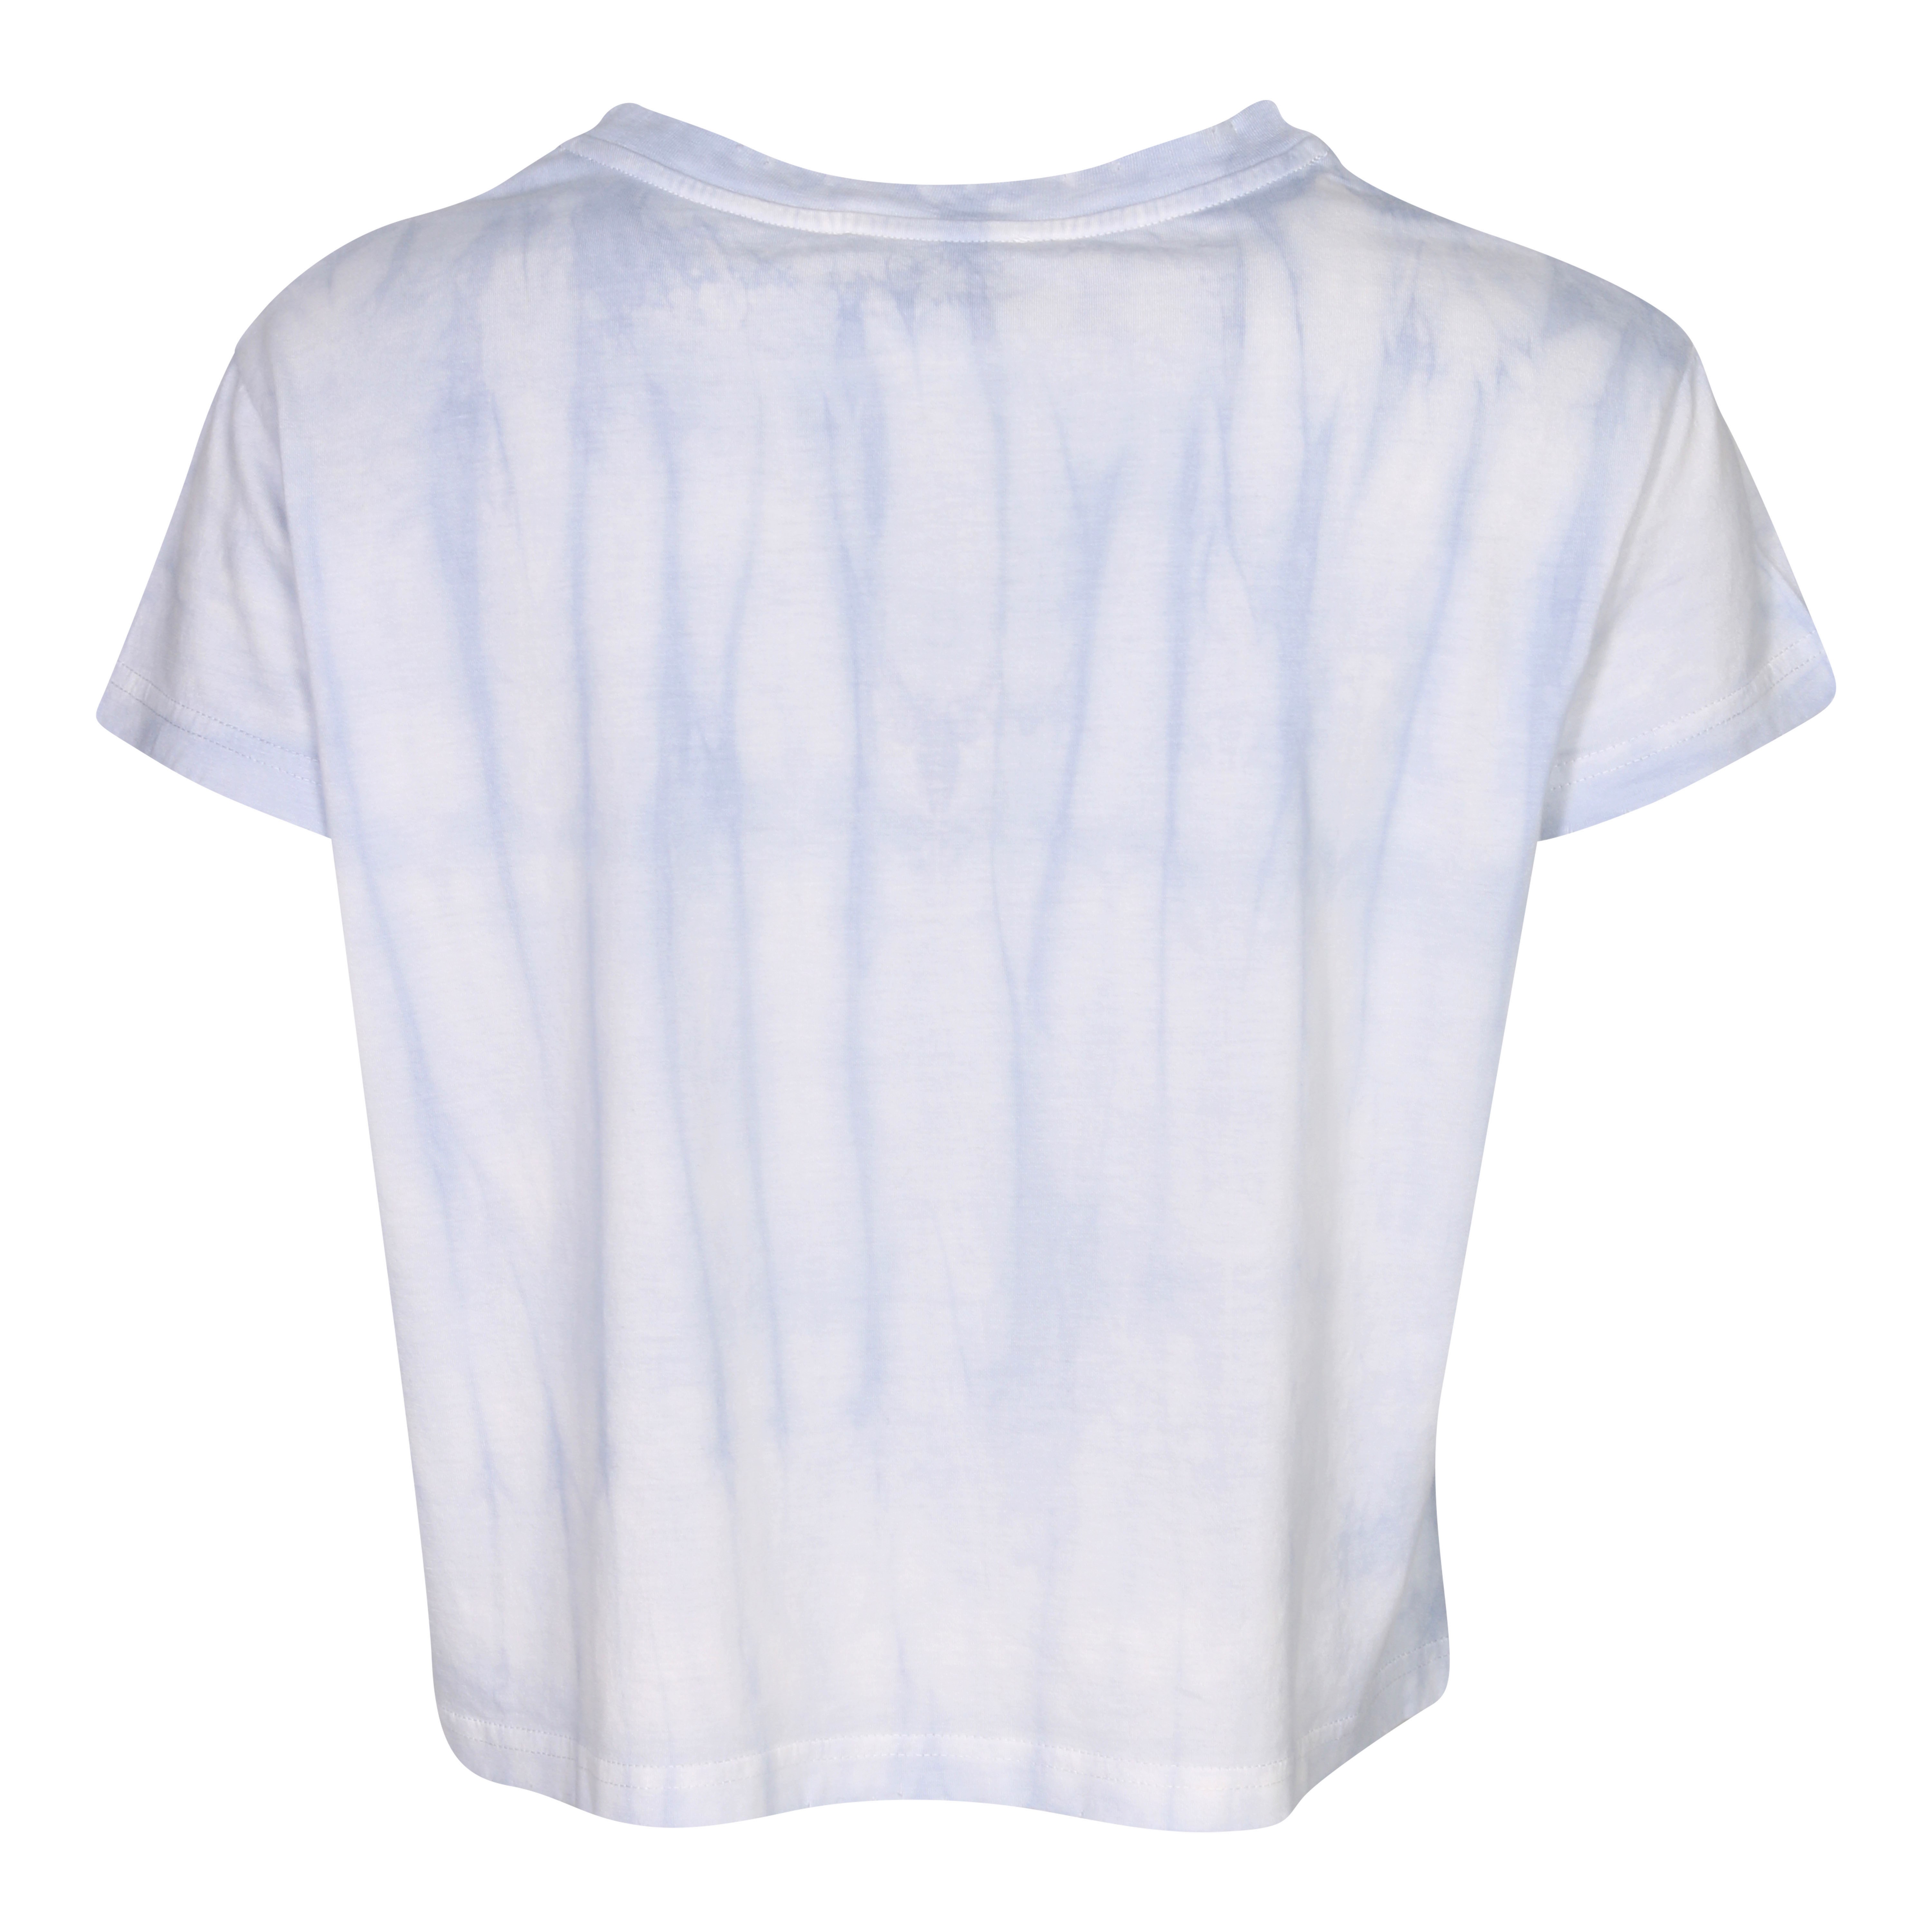 Acne Studios Logo Print T-Shirt in Pale Blue